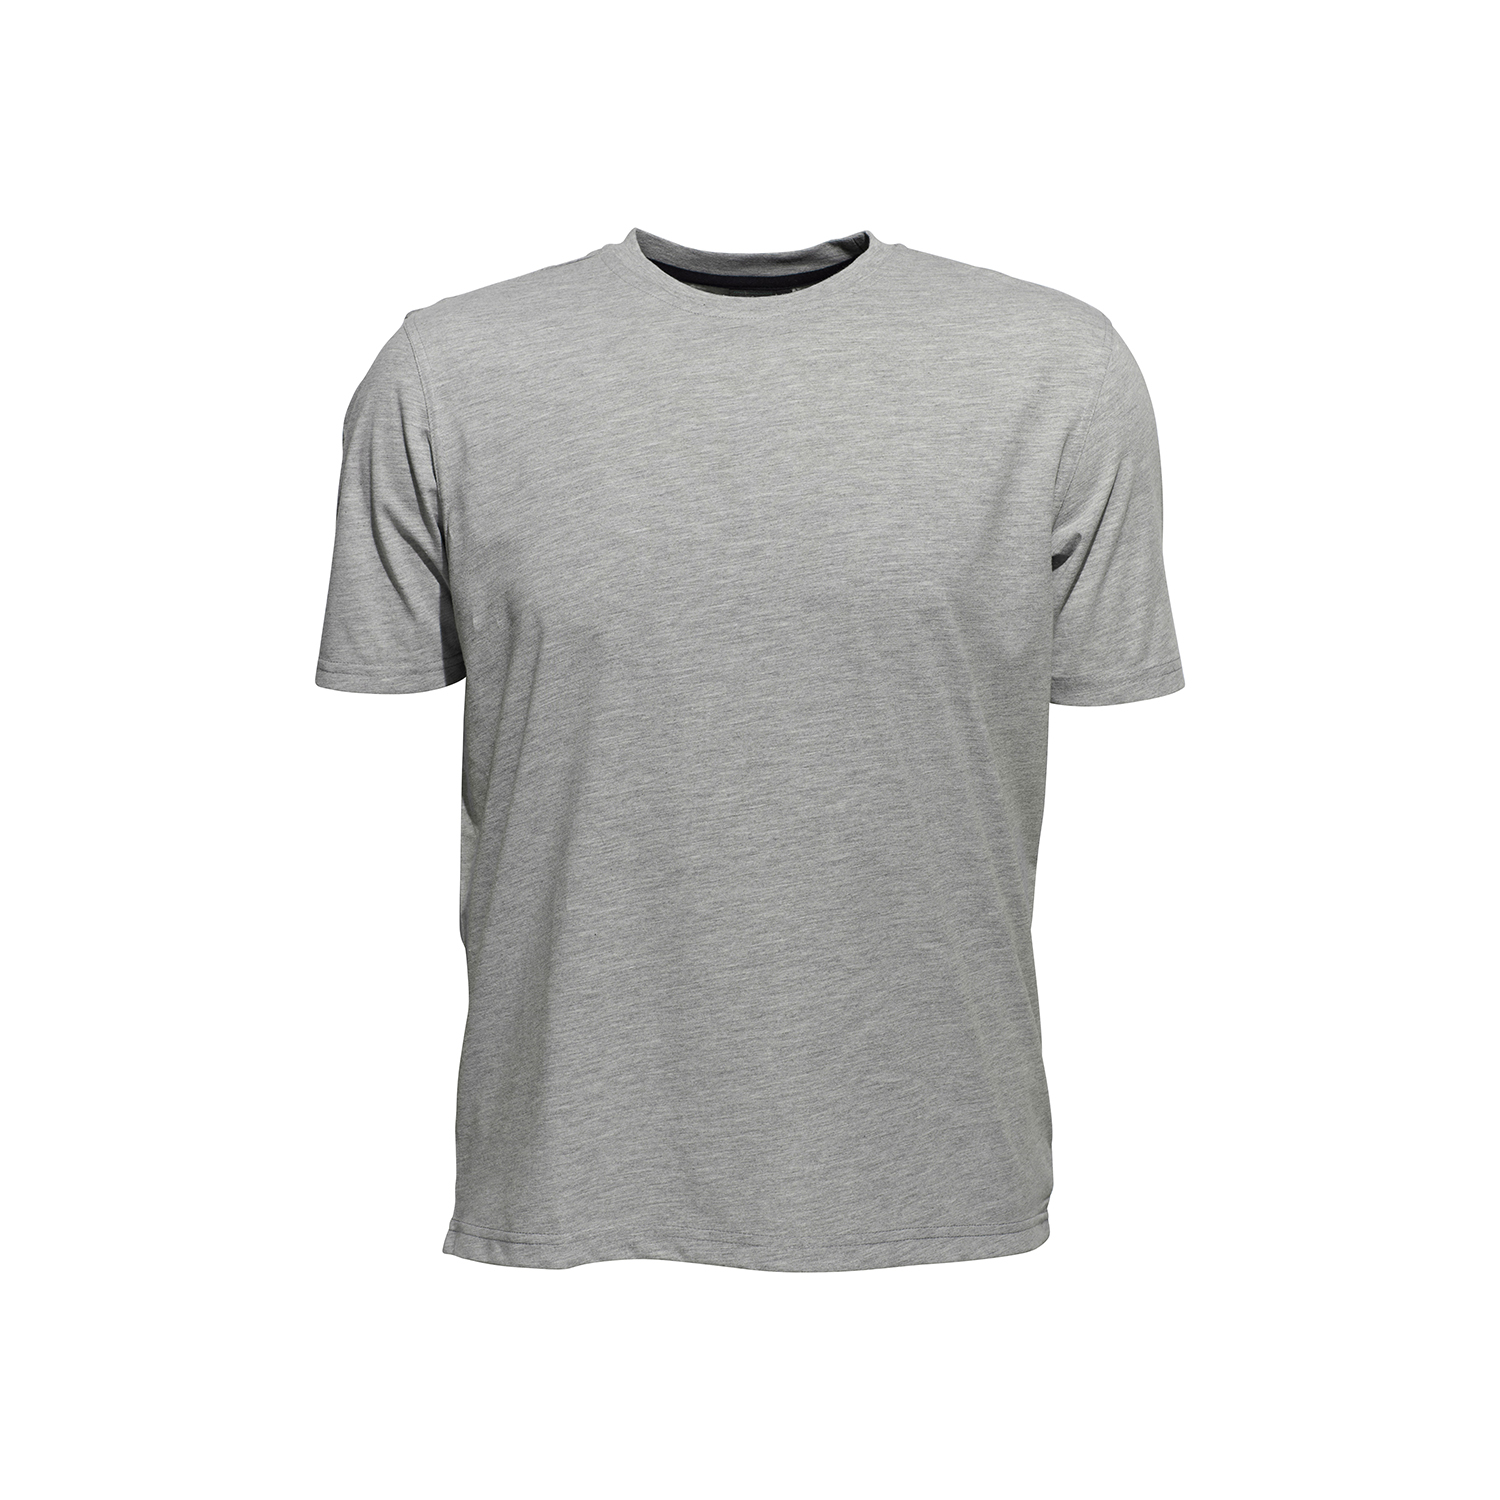 T-shirt en gris chiné by Ahorn Sportswear en grandes tailles 2XL - 10XL